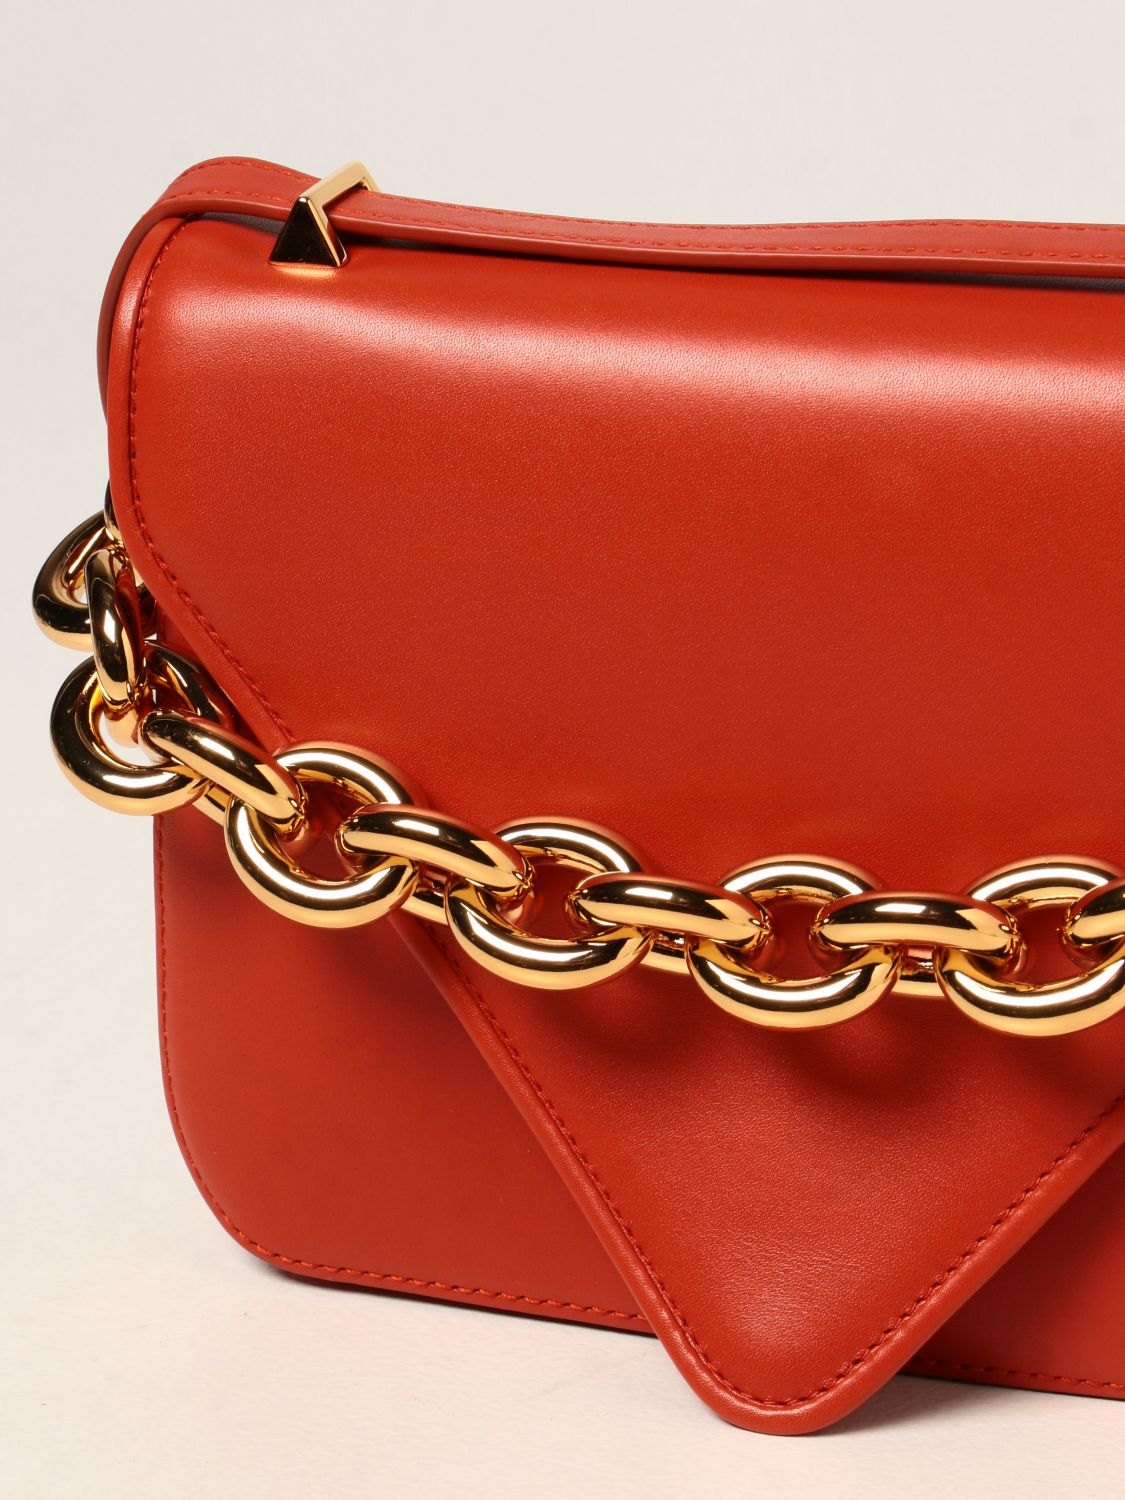 BOTTEGA VENETA: Mount bag in leather with chain detail | Crossbody Bags ...